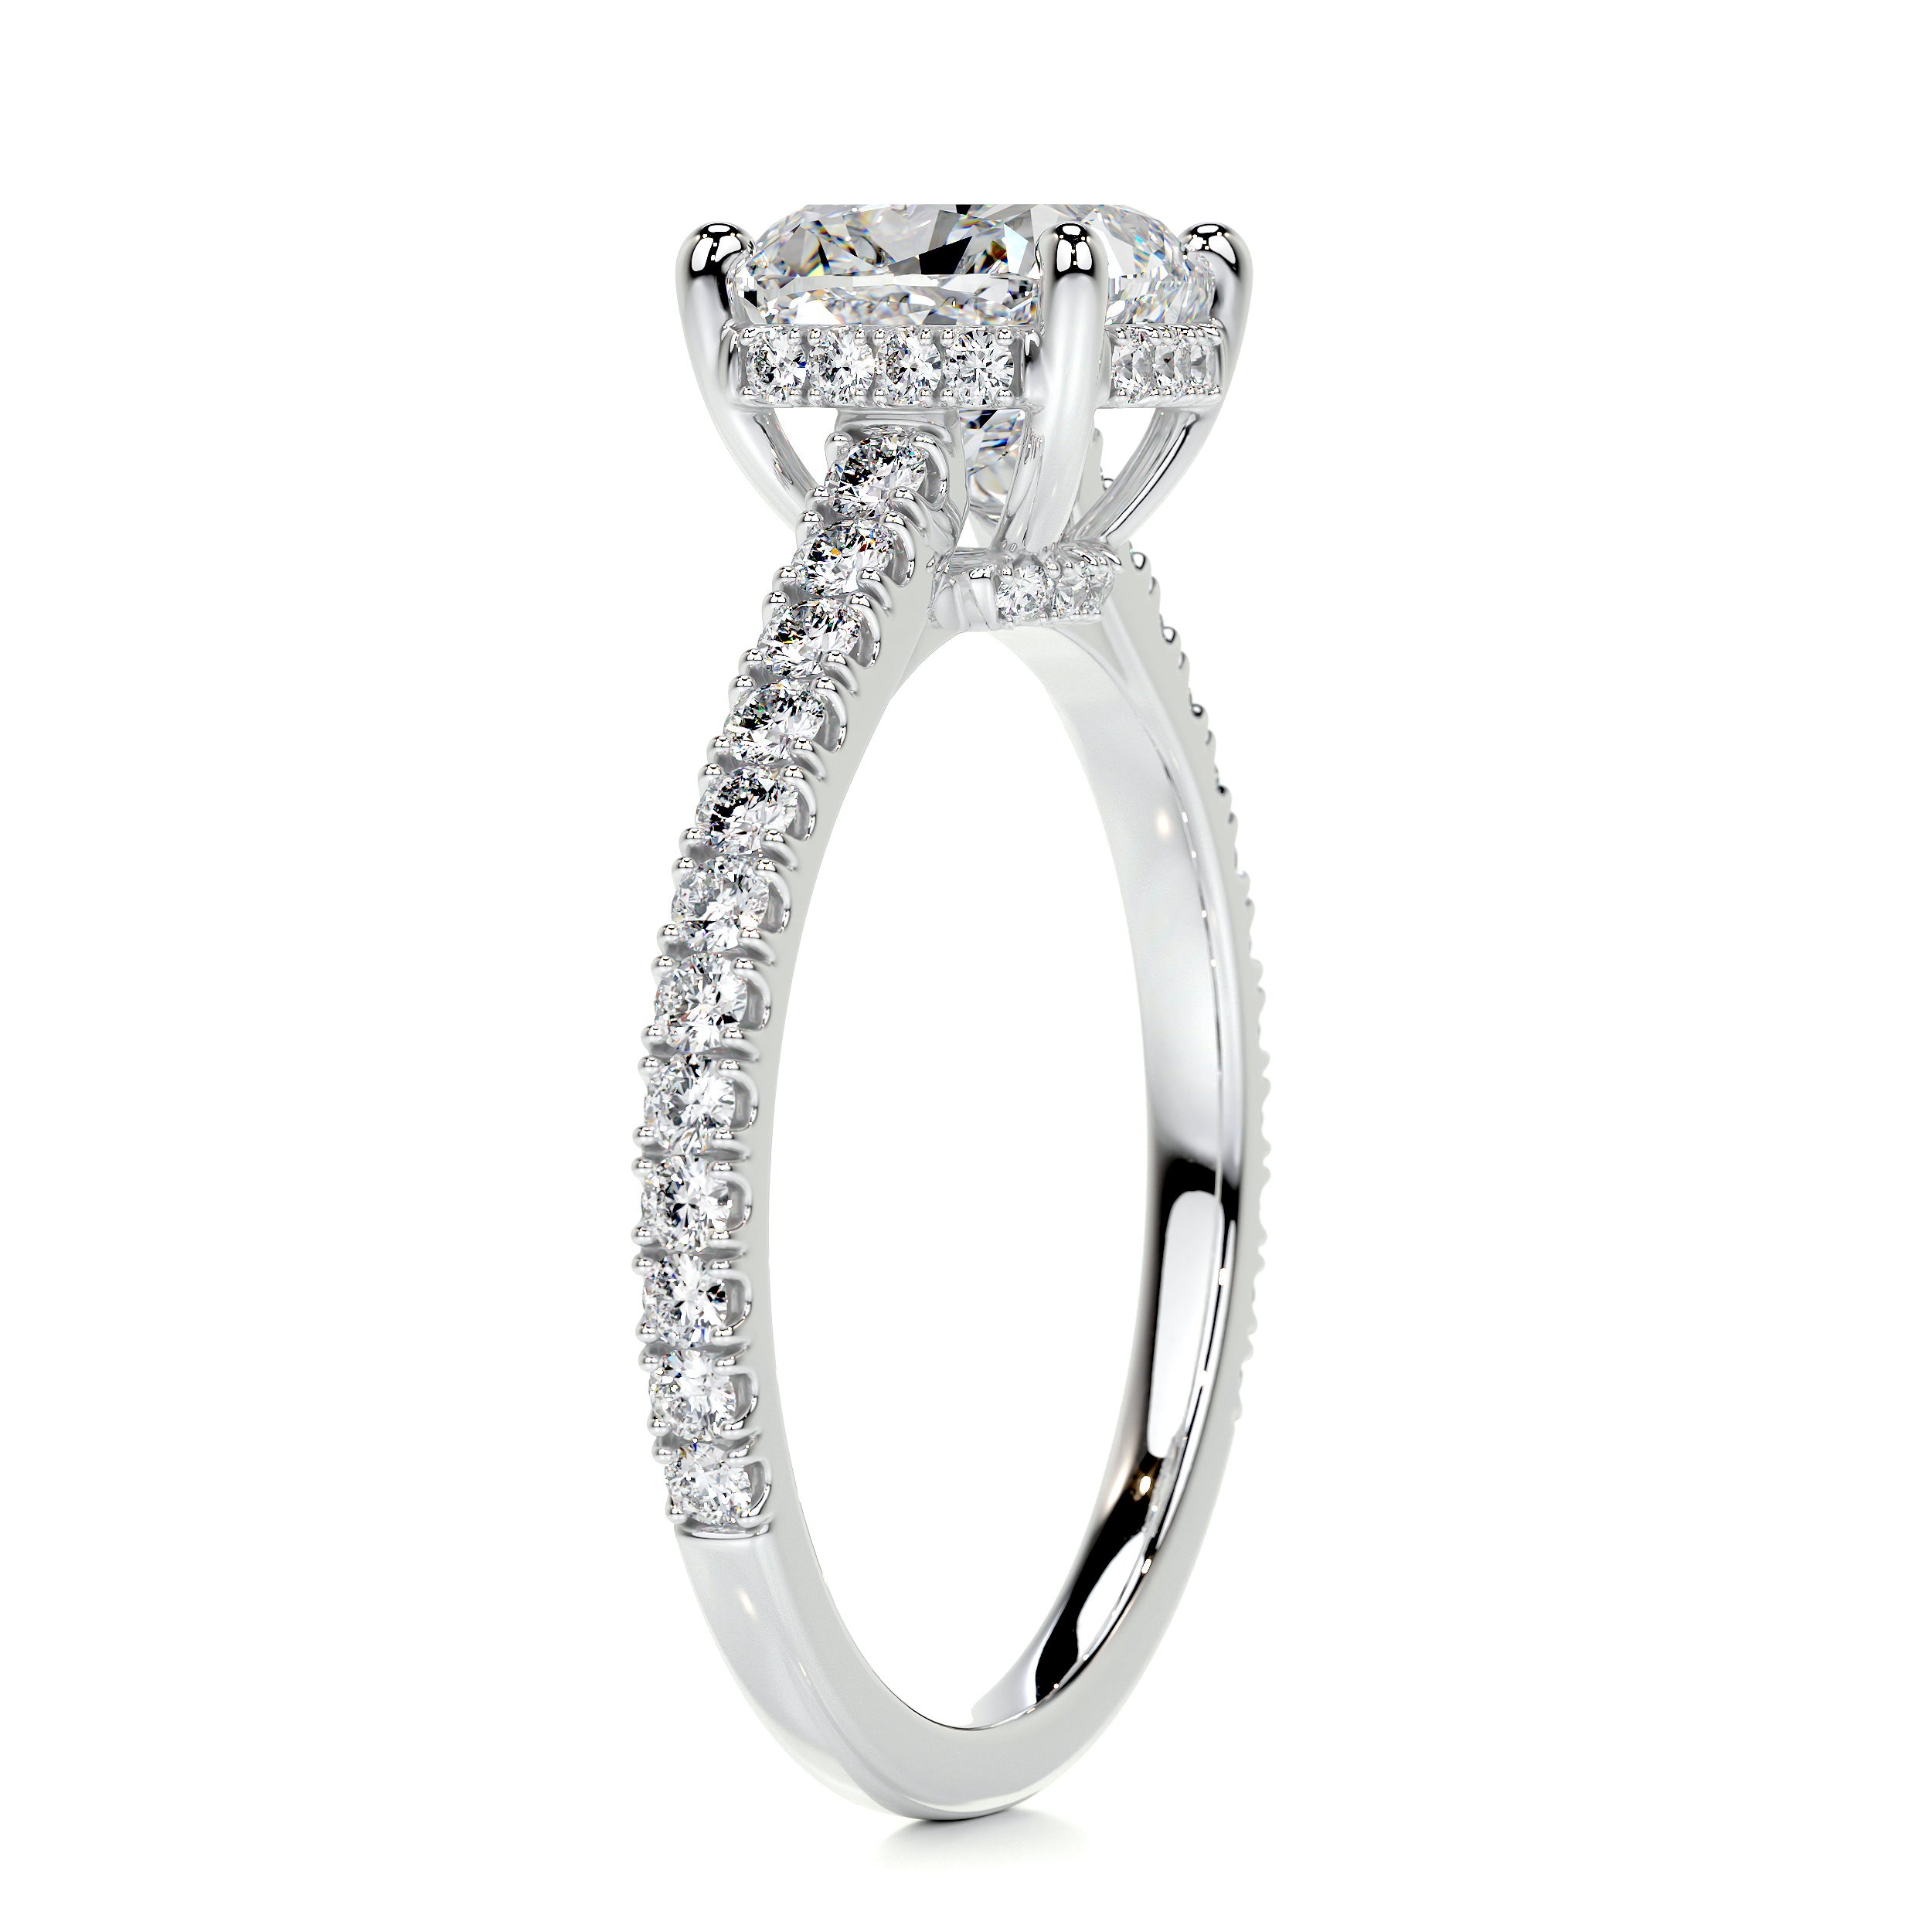 Cassandra Diamond Engagement Ring   (2 Carat) -14K White Gold